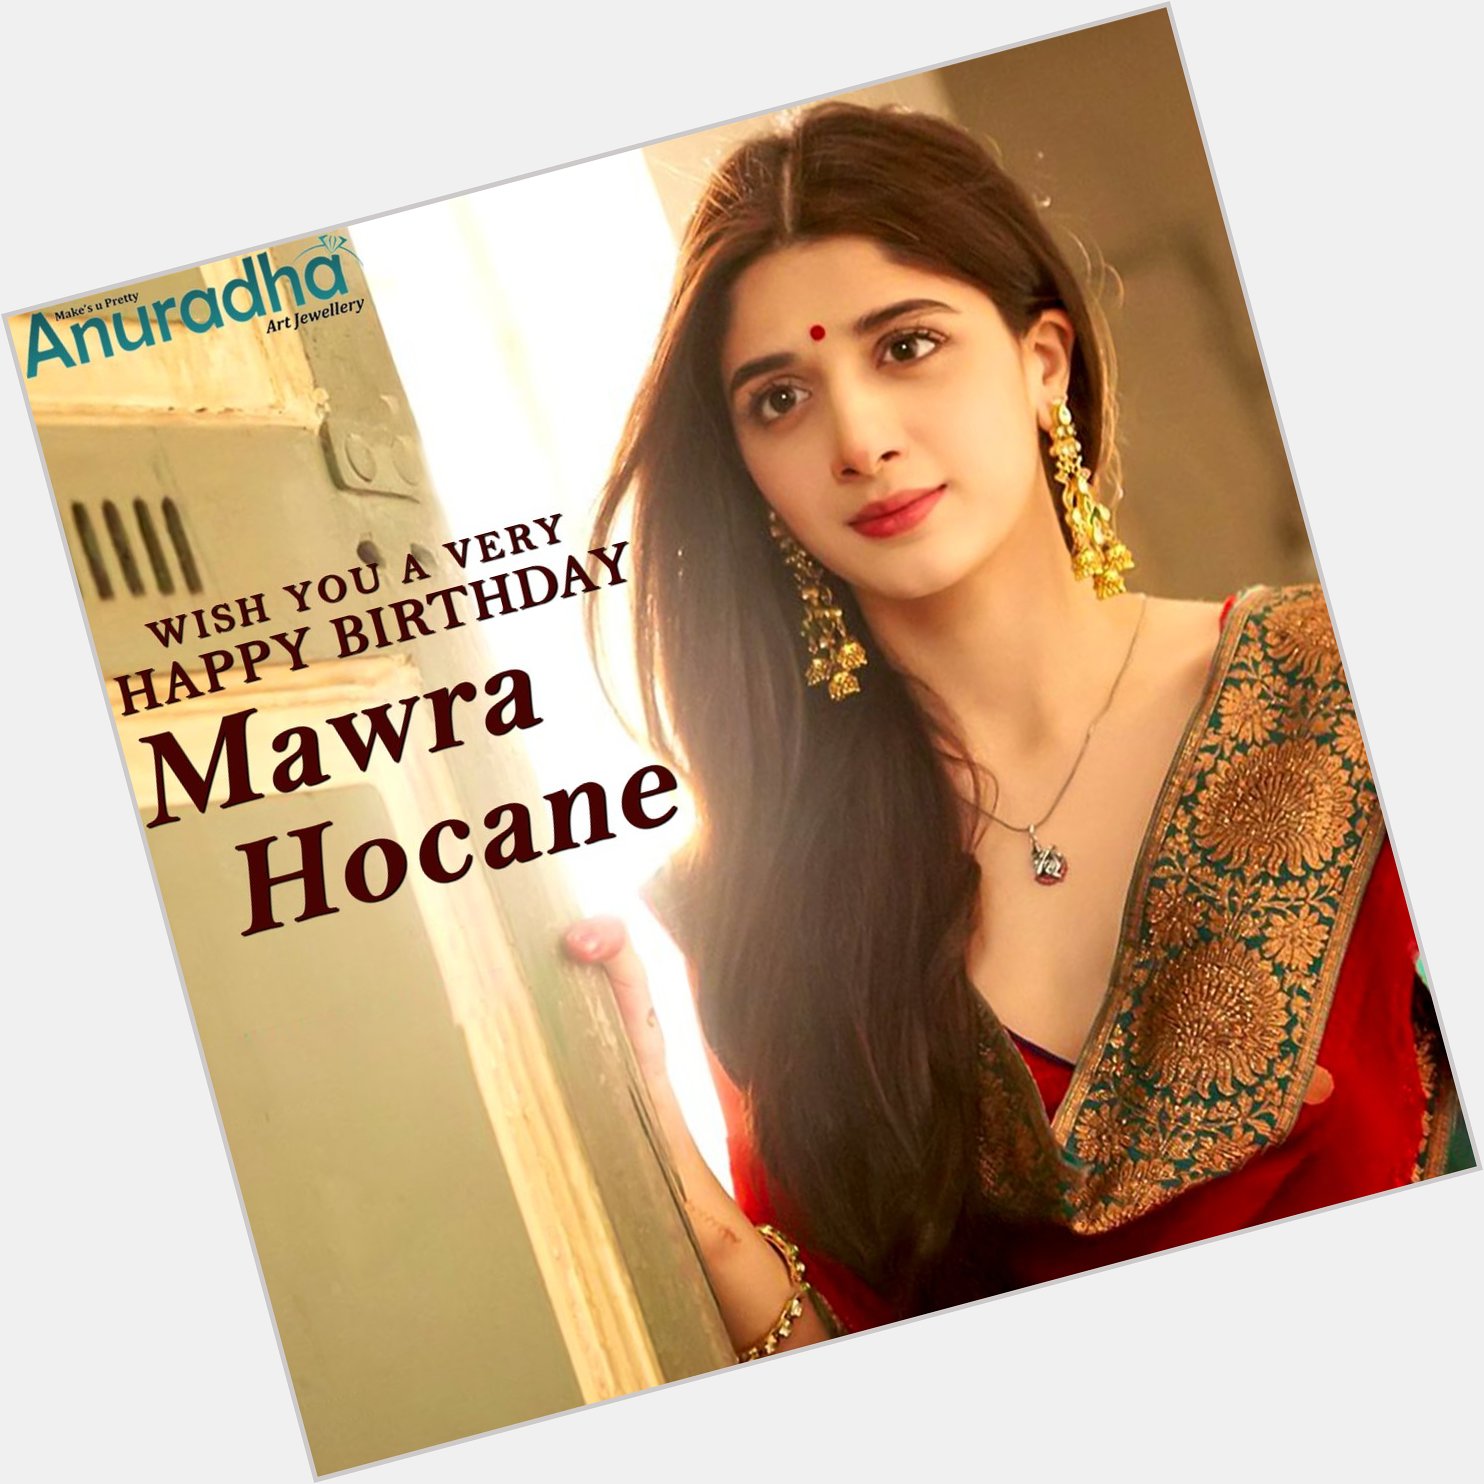  Anuradha Art Jewellery Wishes a Very Happy Birthday to Mawra Hocane 